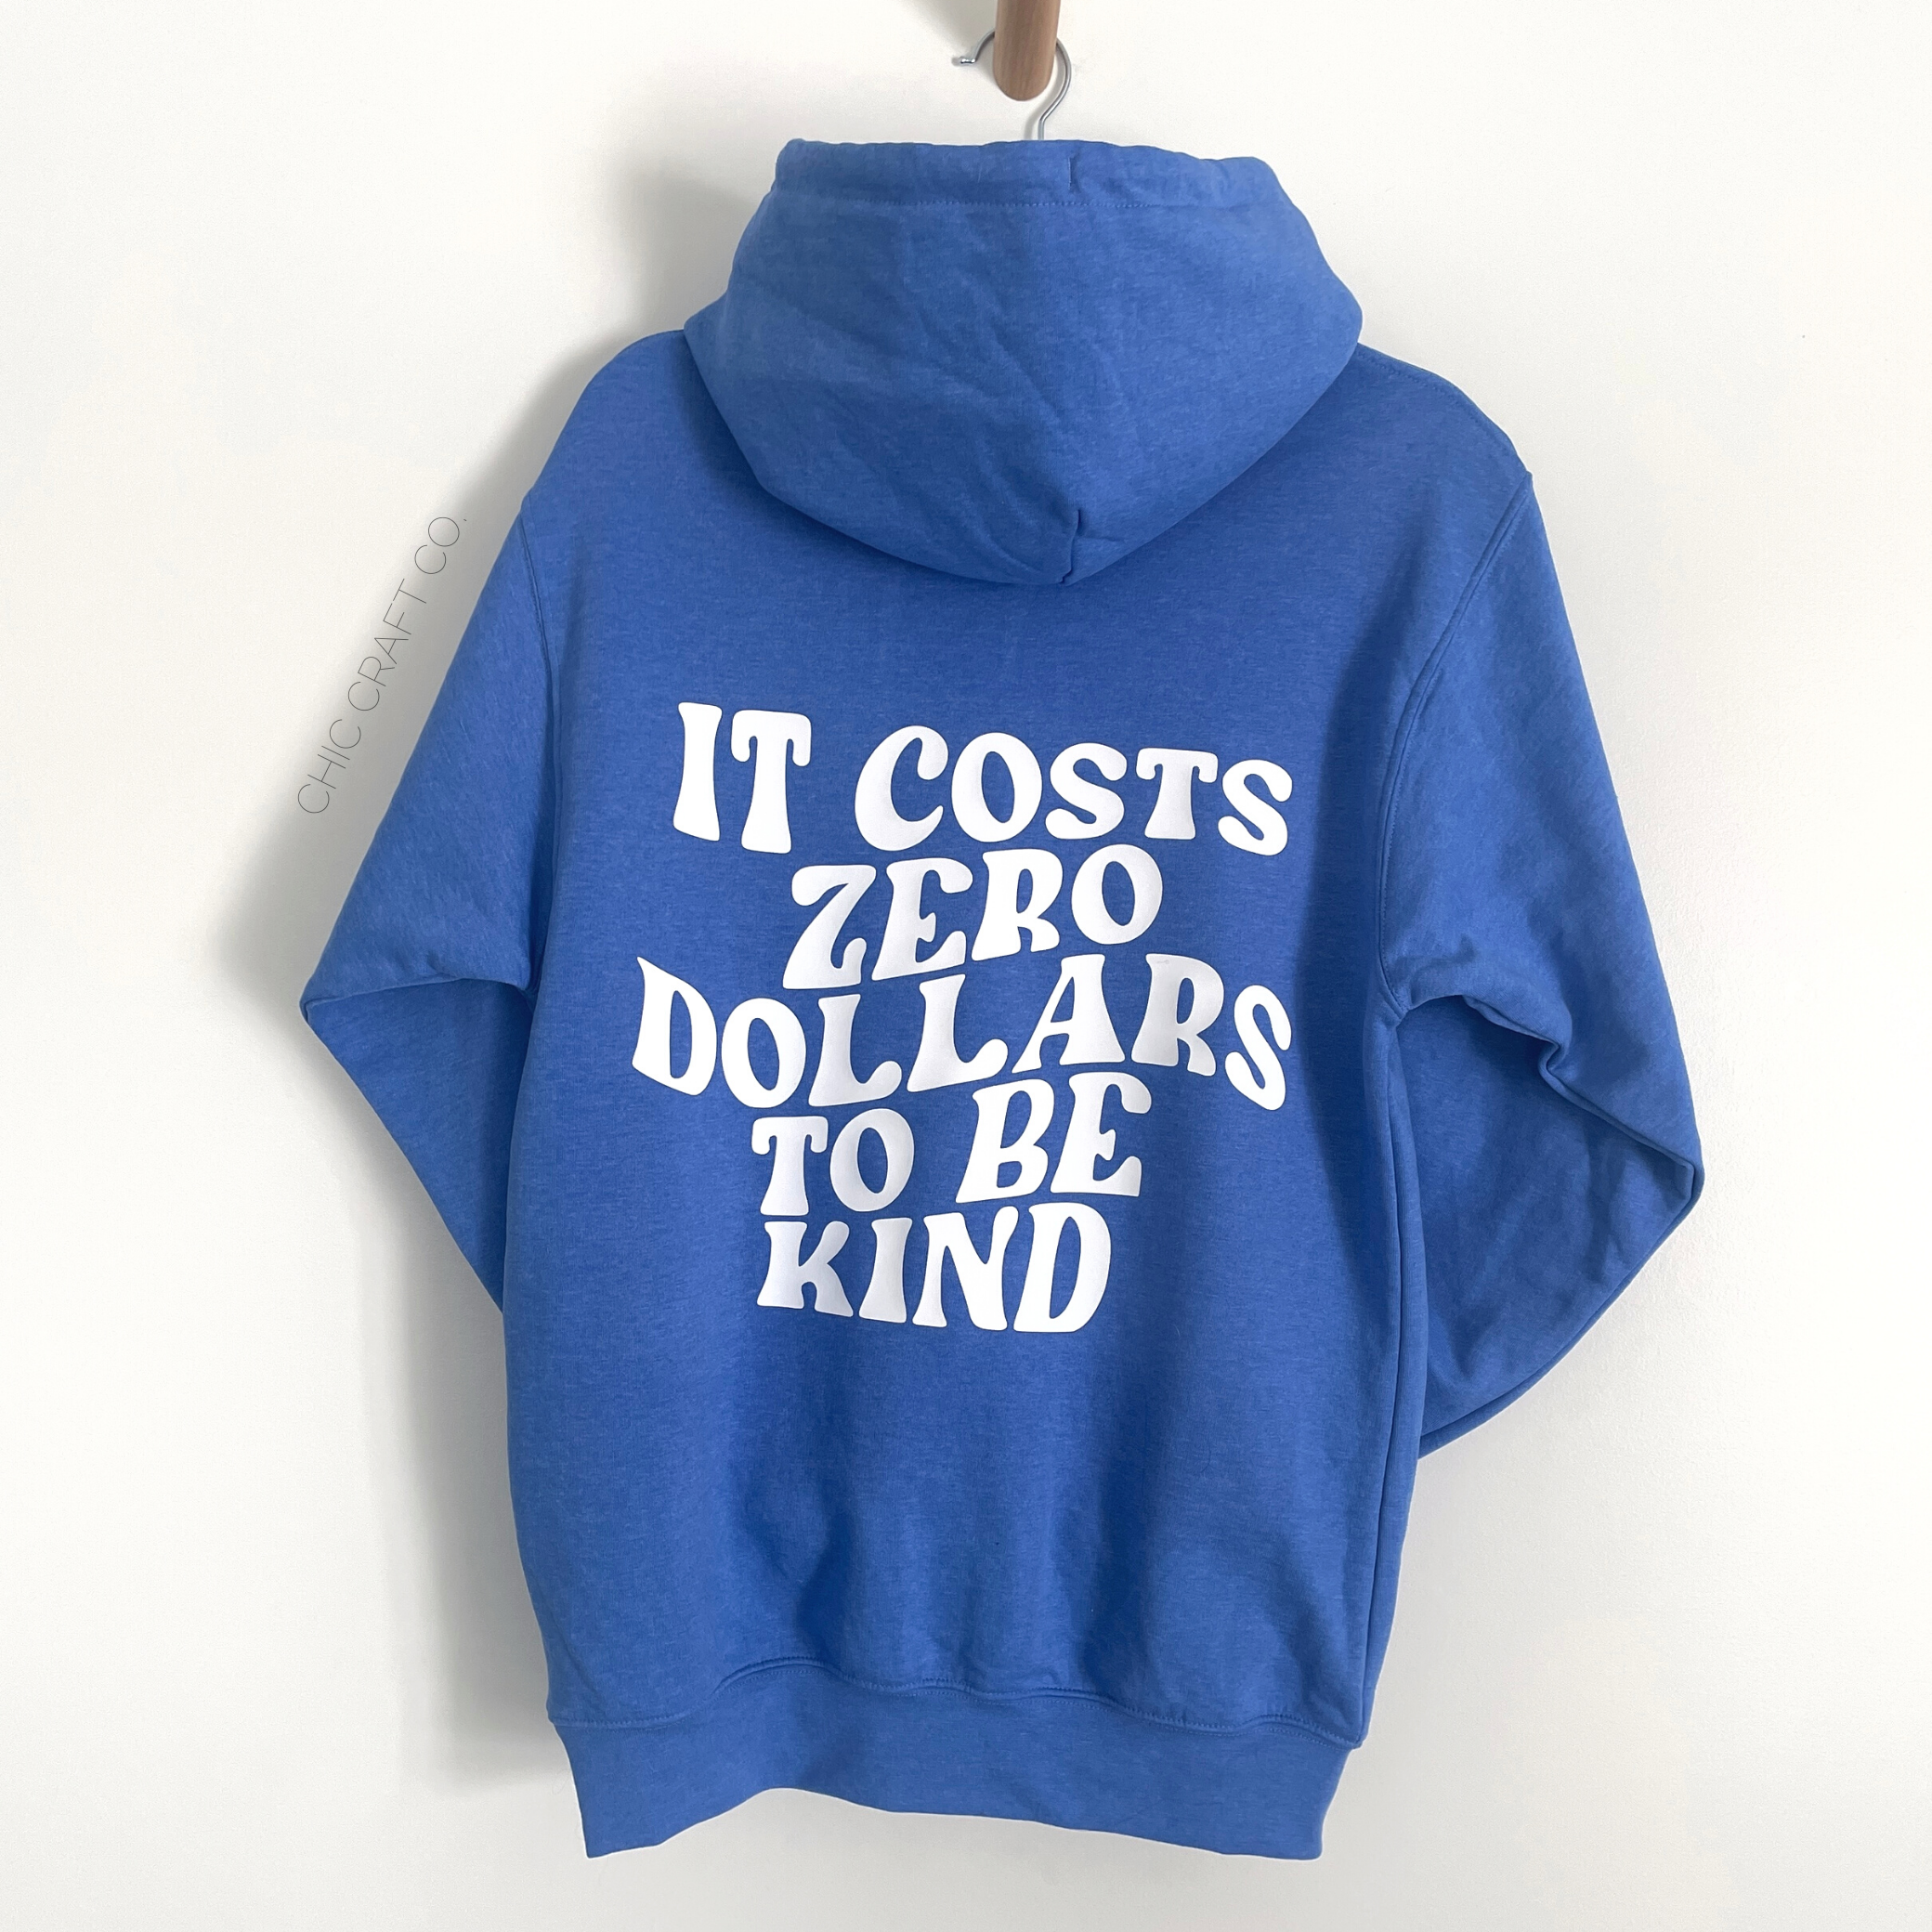 Zero Dollars To Be Kind Hoodie - LAST ONE Sz. Small